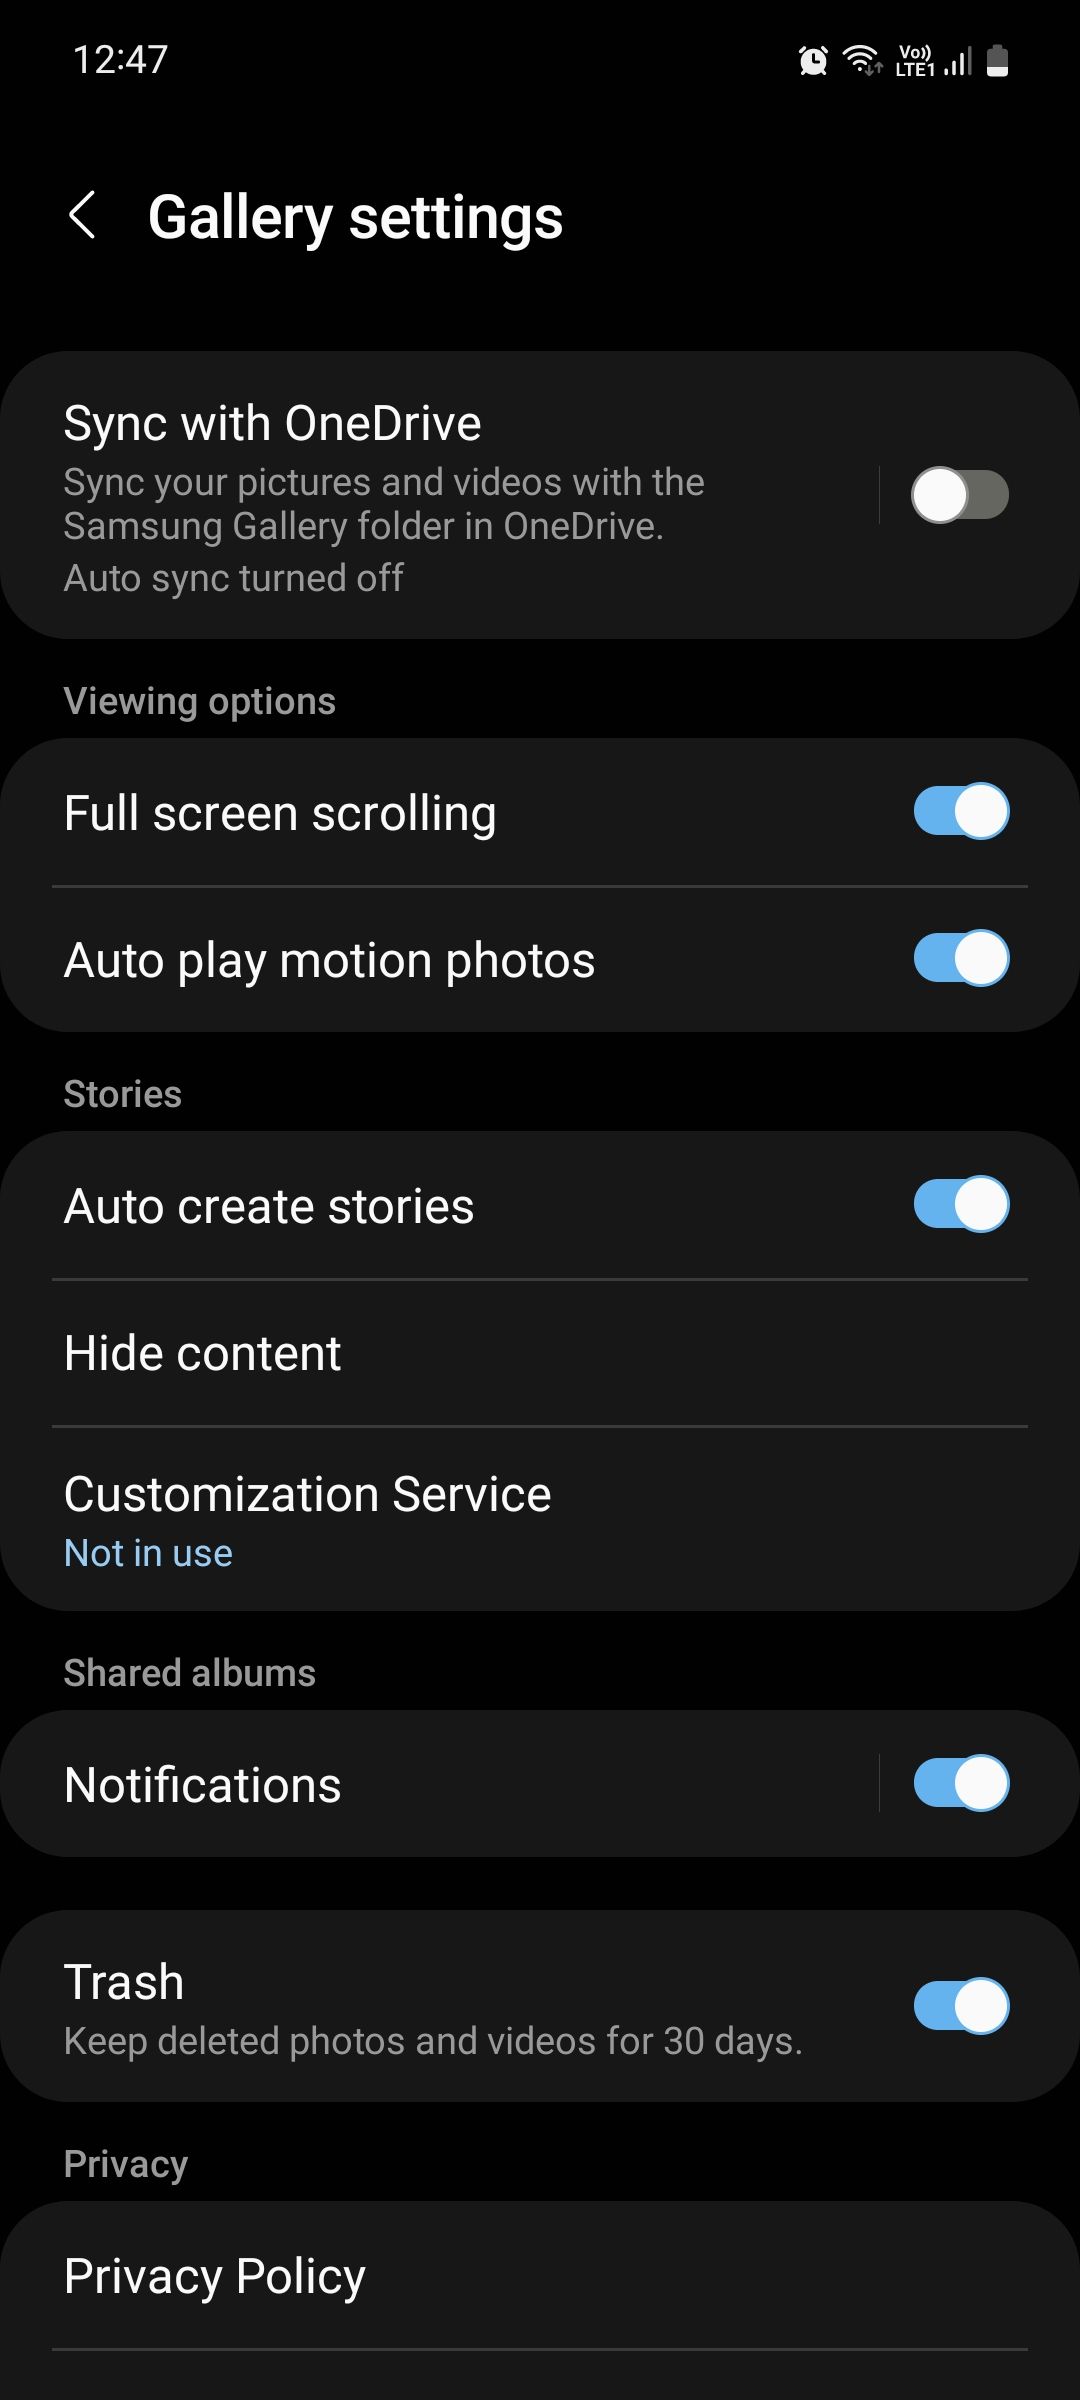 Samsung Gallery settings